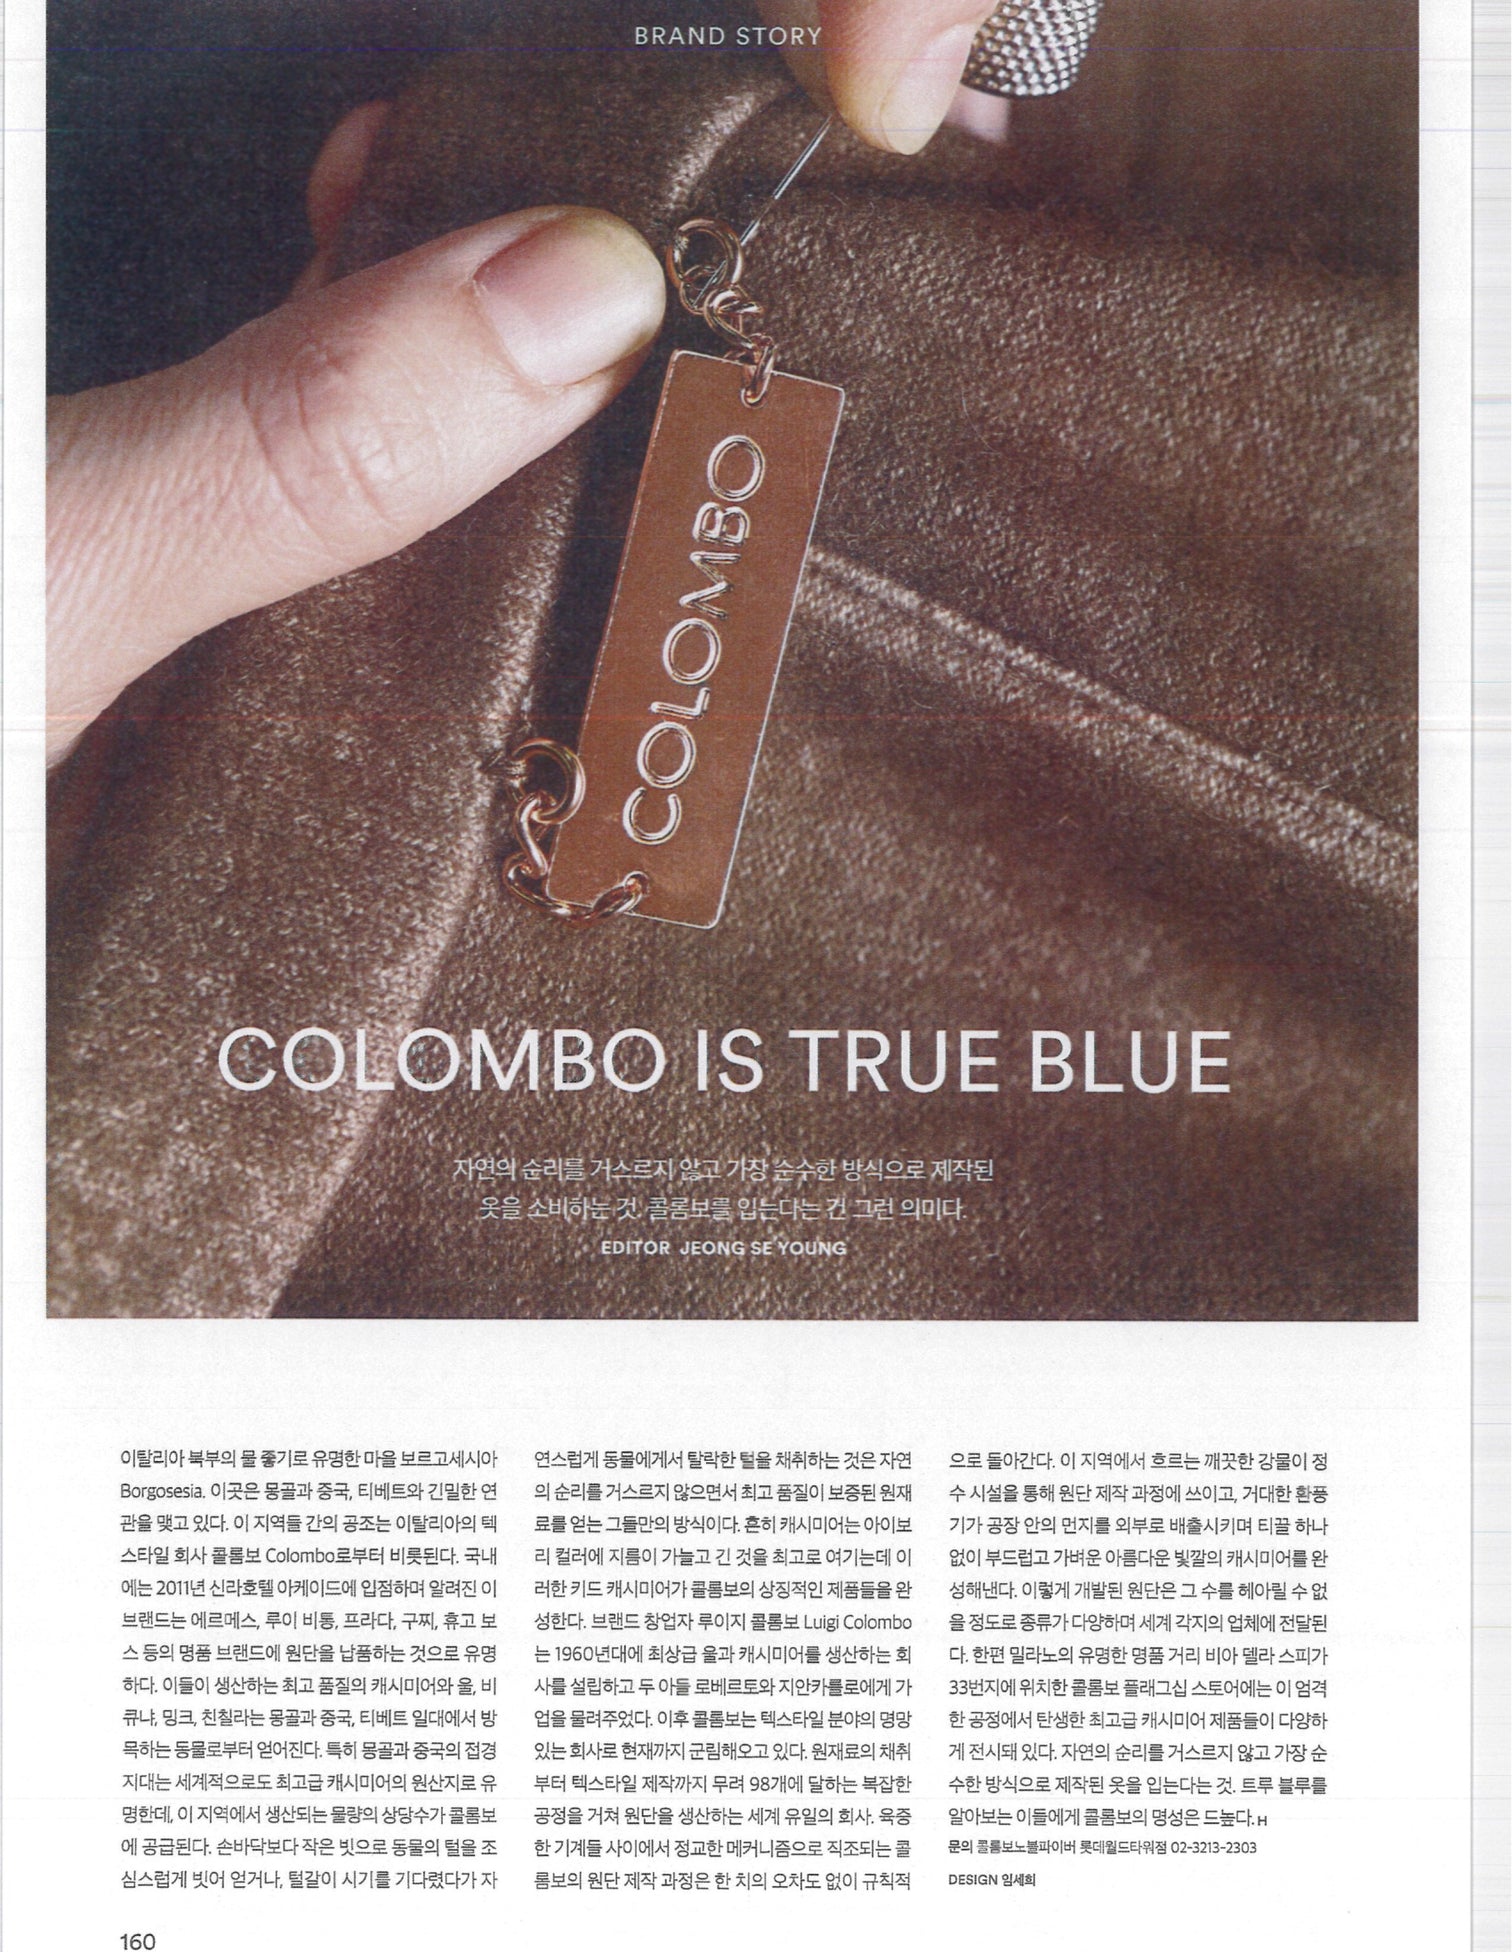 HERREN KOREA - Colombo is true blue